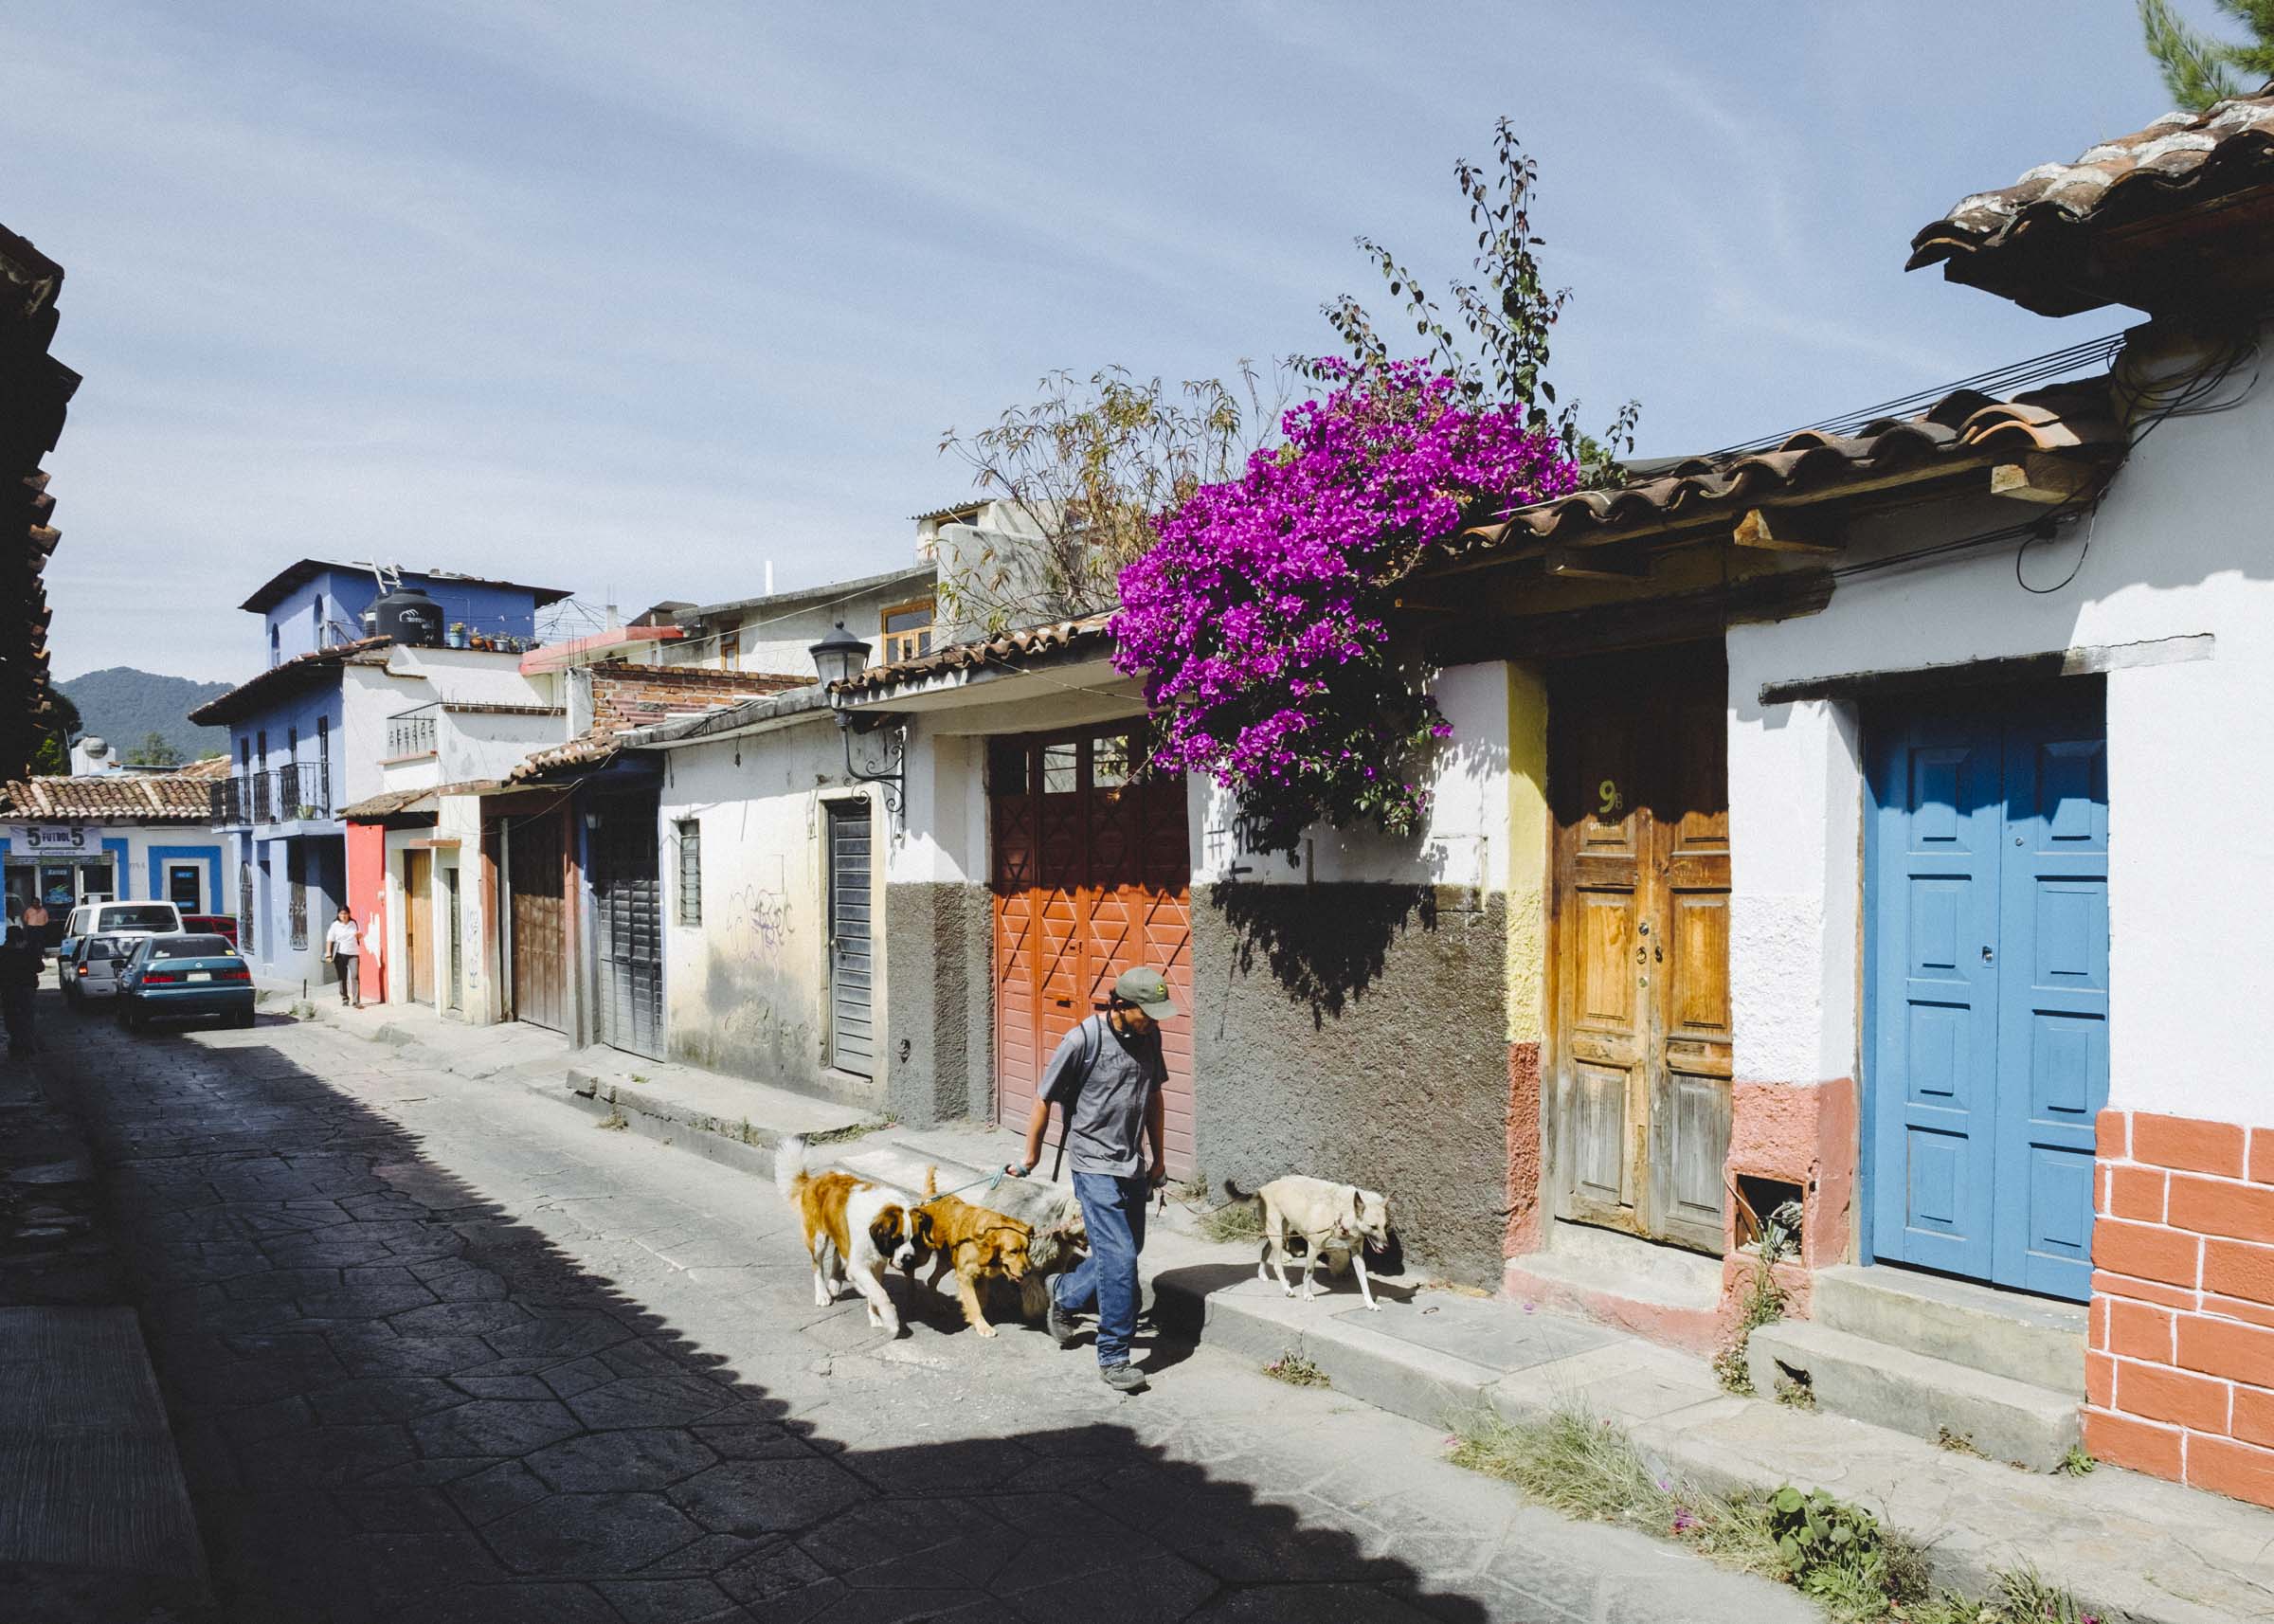 Street life of Mexico